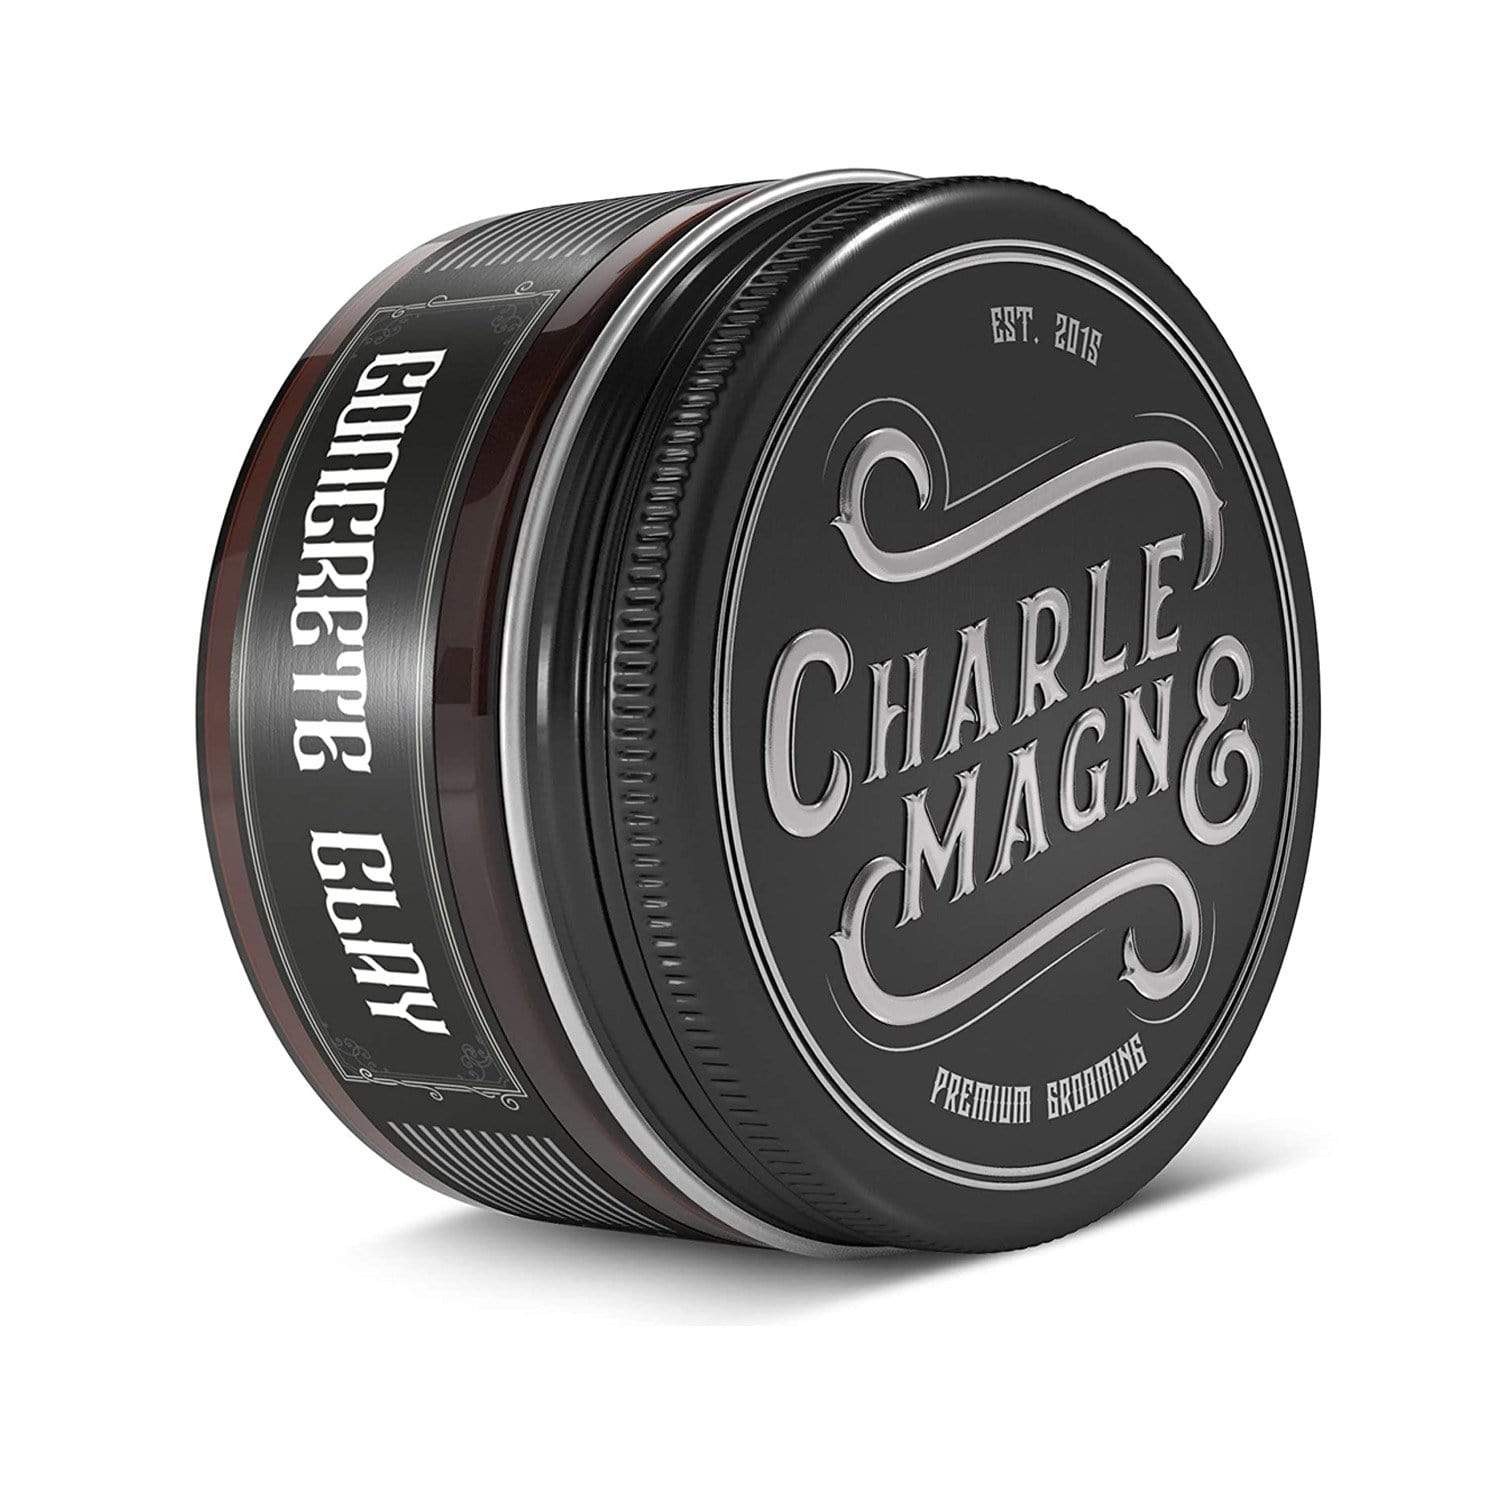 Beardcare Bundle • Charlemagne Premium